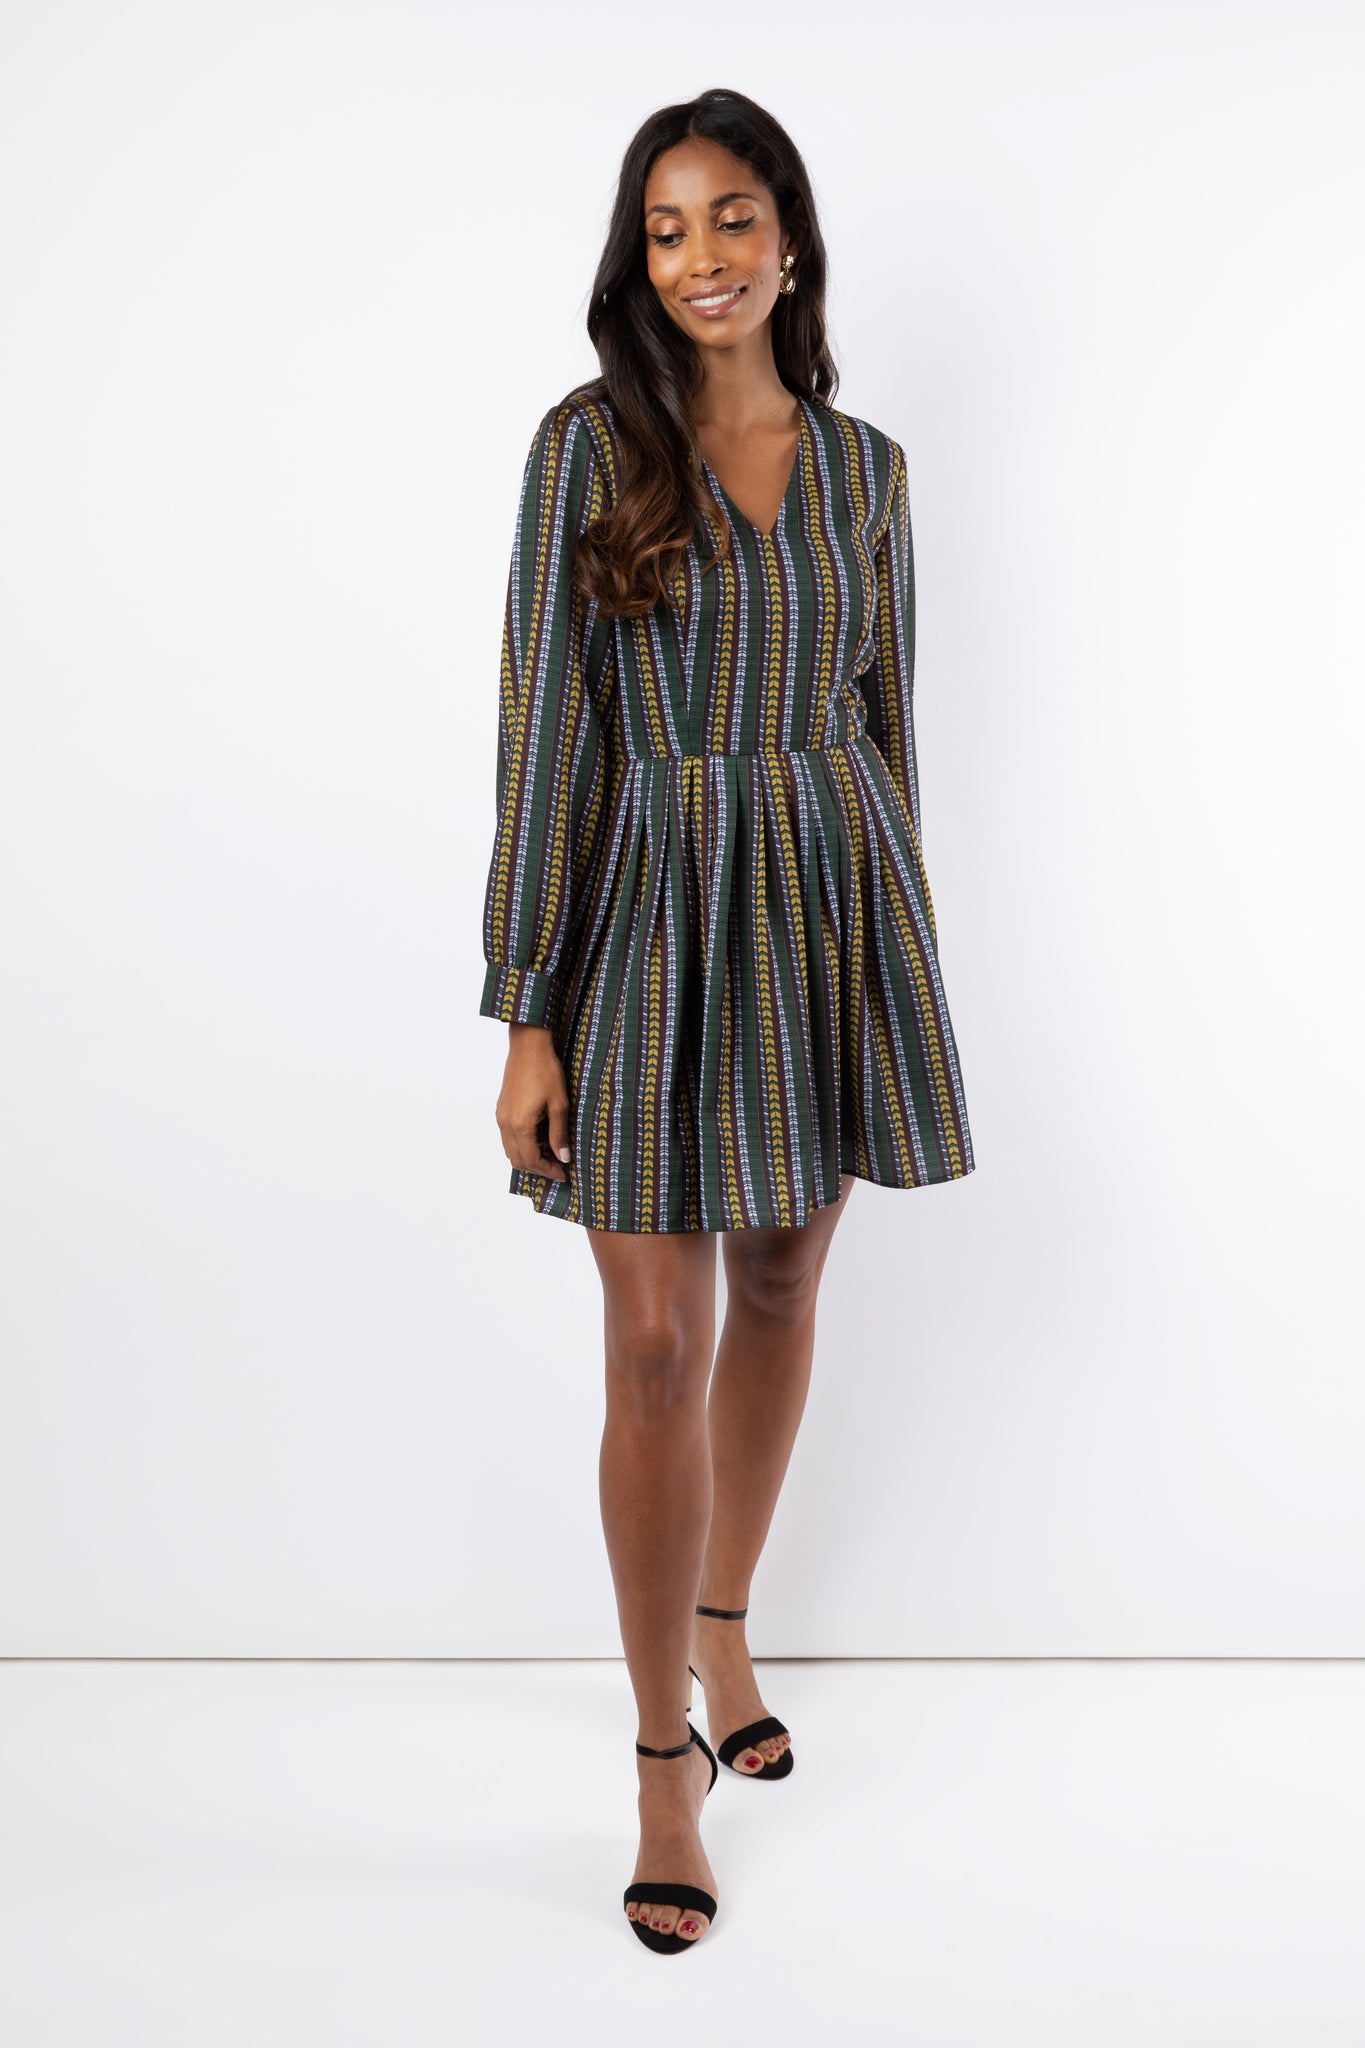 Model wears short geometric printed dress with sleeves